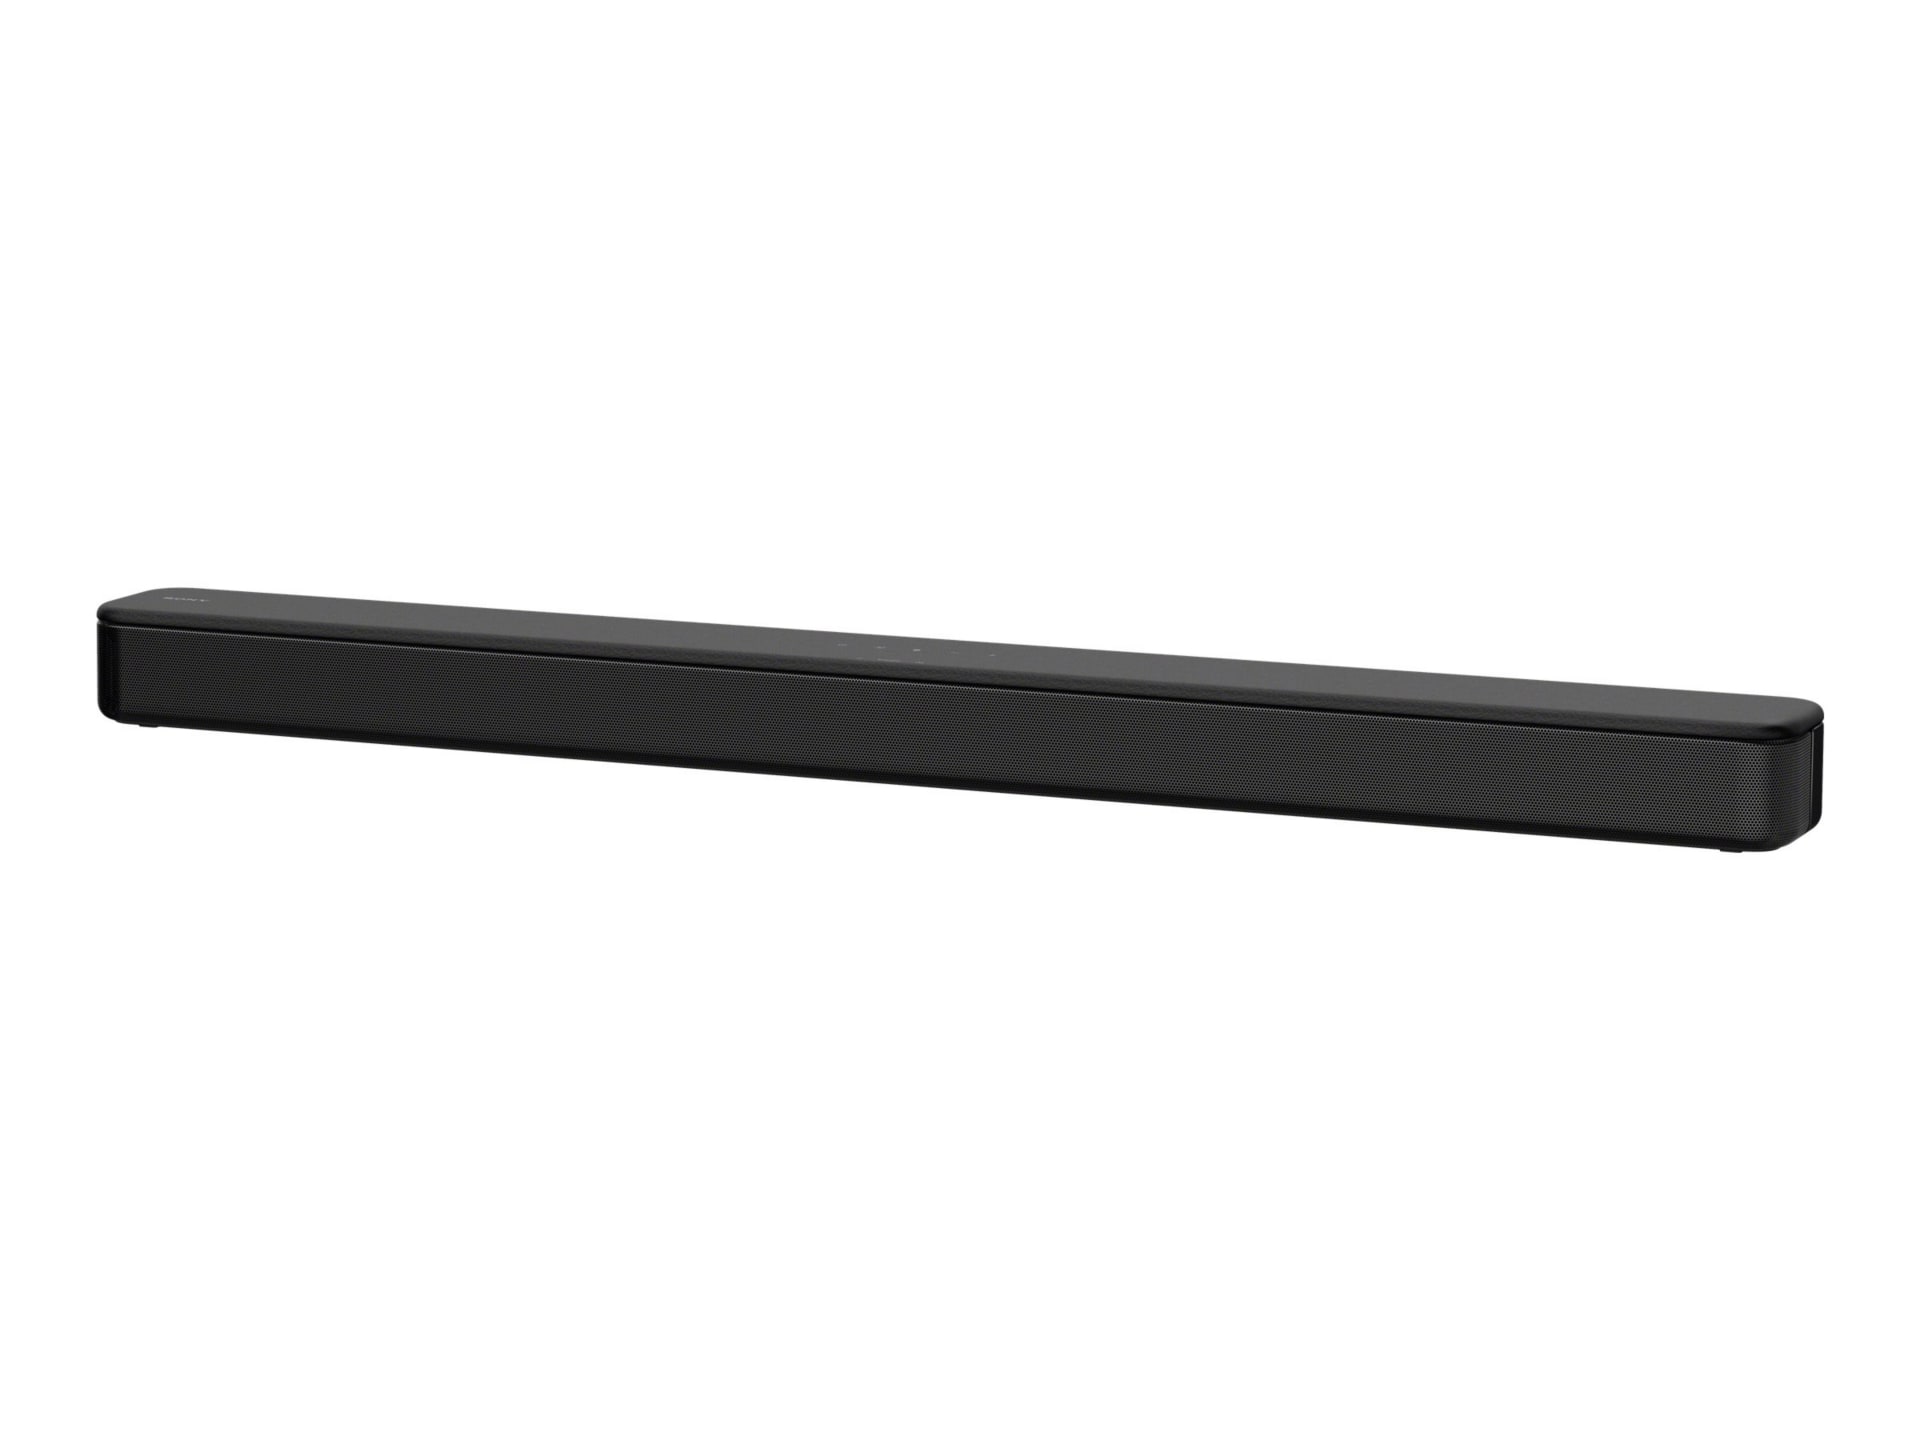 Sony HT-S100F - sound bar - for TV - wireless